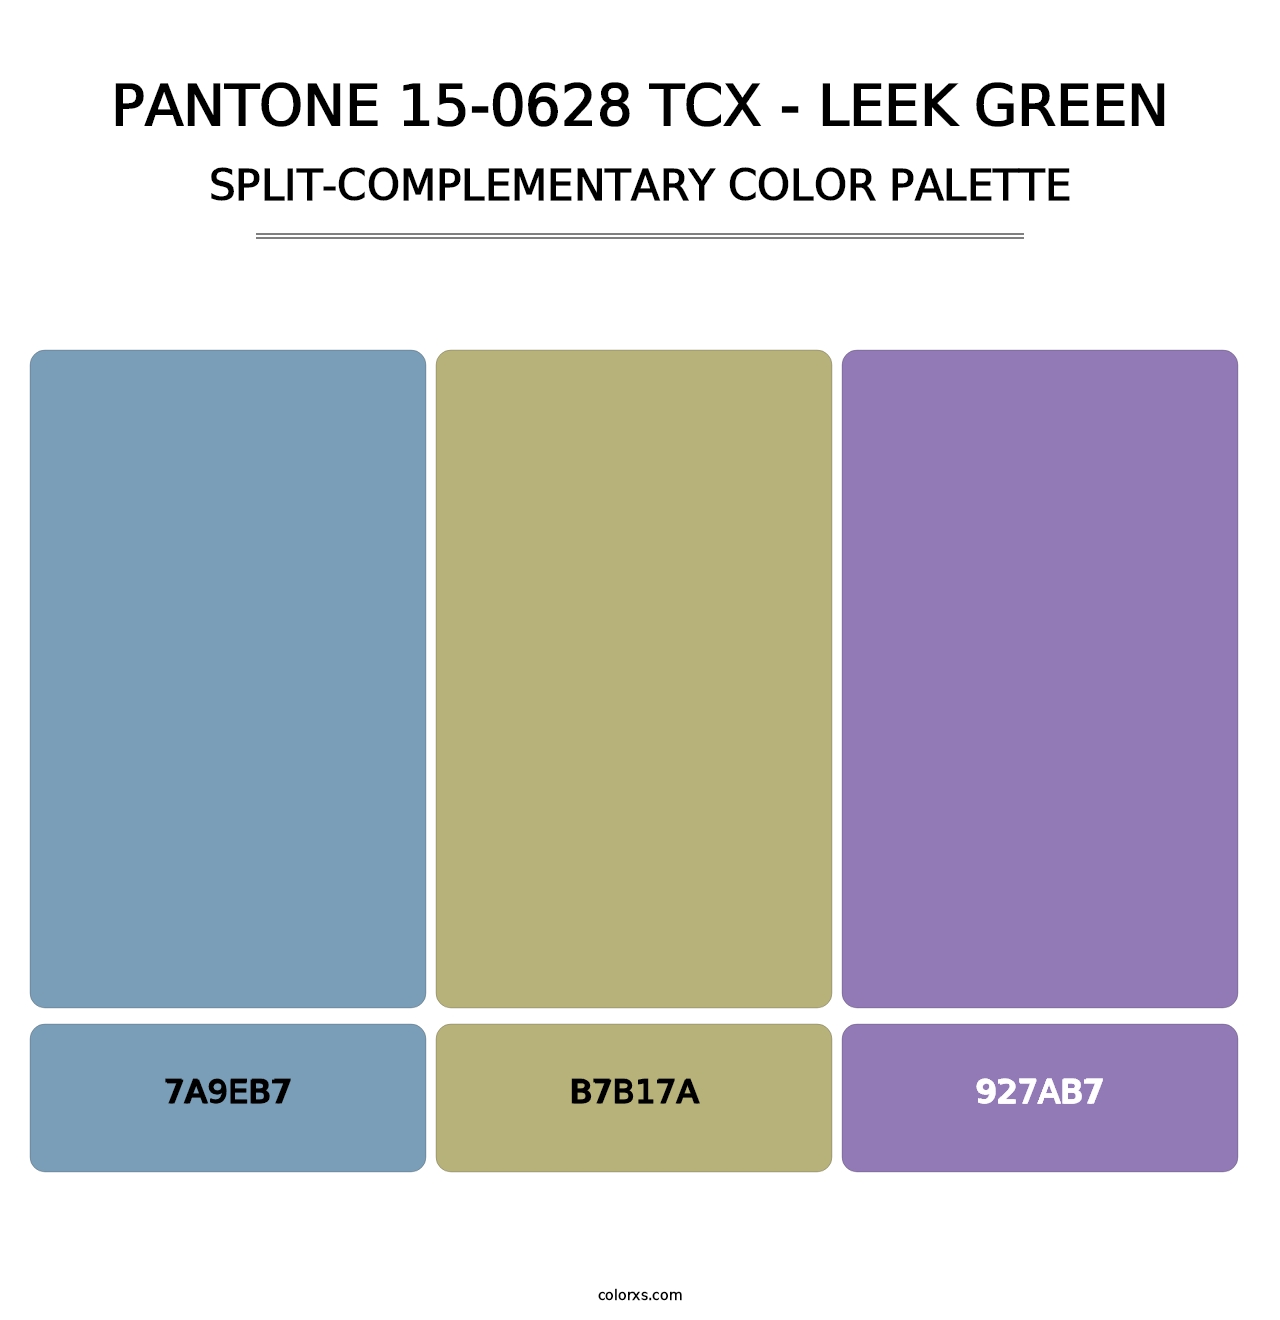 PANTONE 15-0628 TCX - Leek Green - Split-Complementary Color Palette